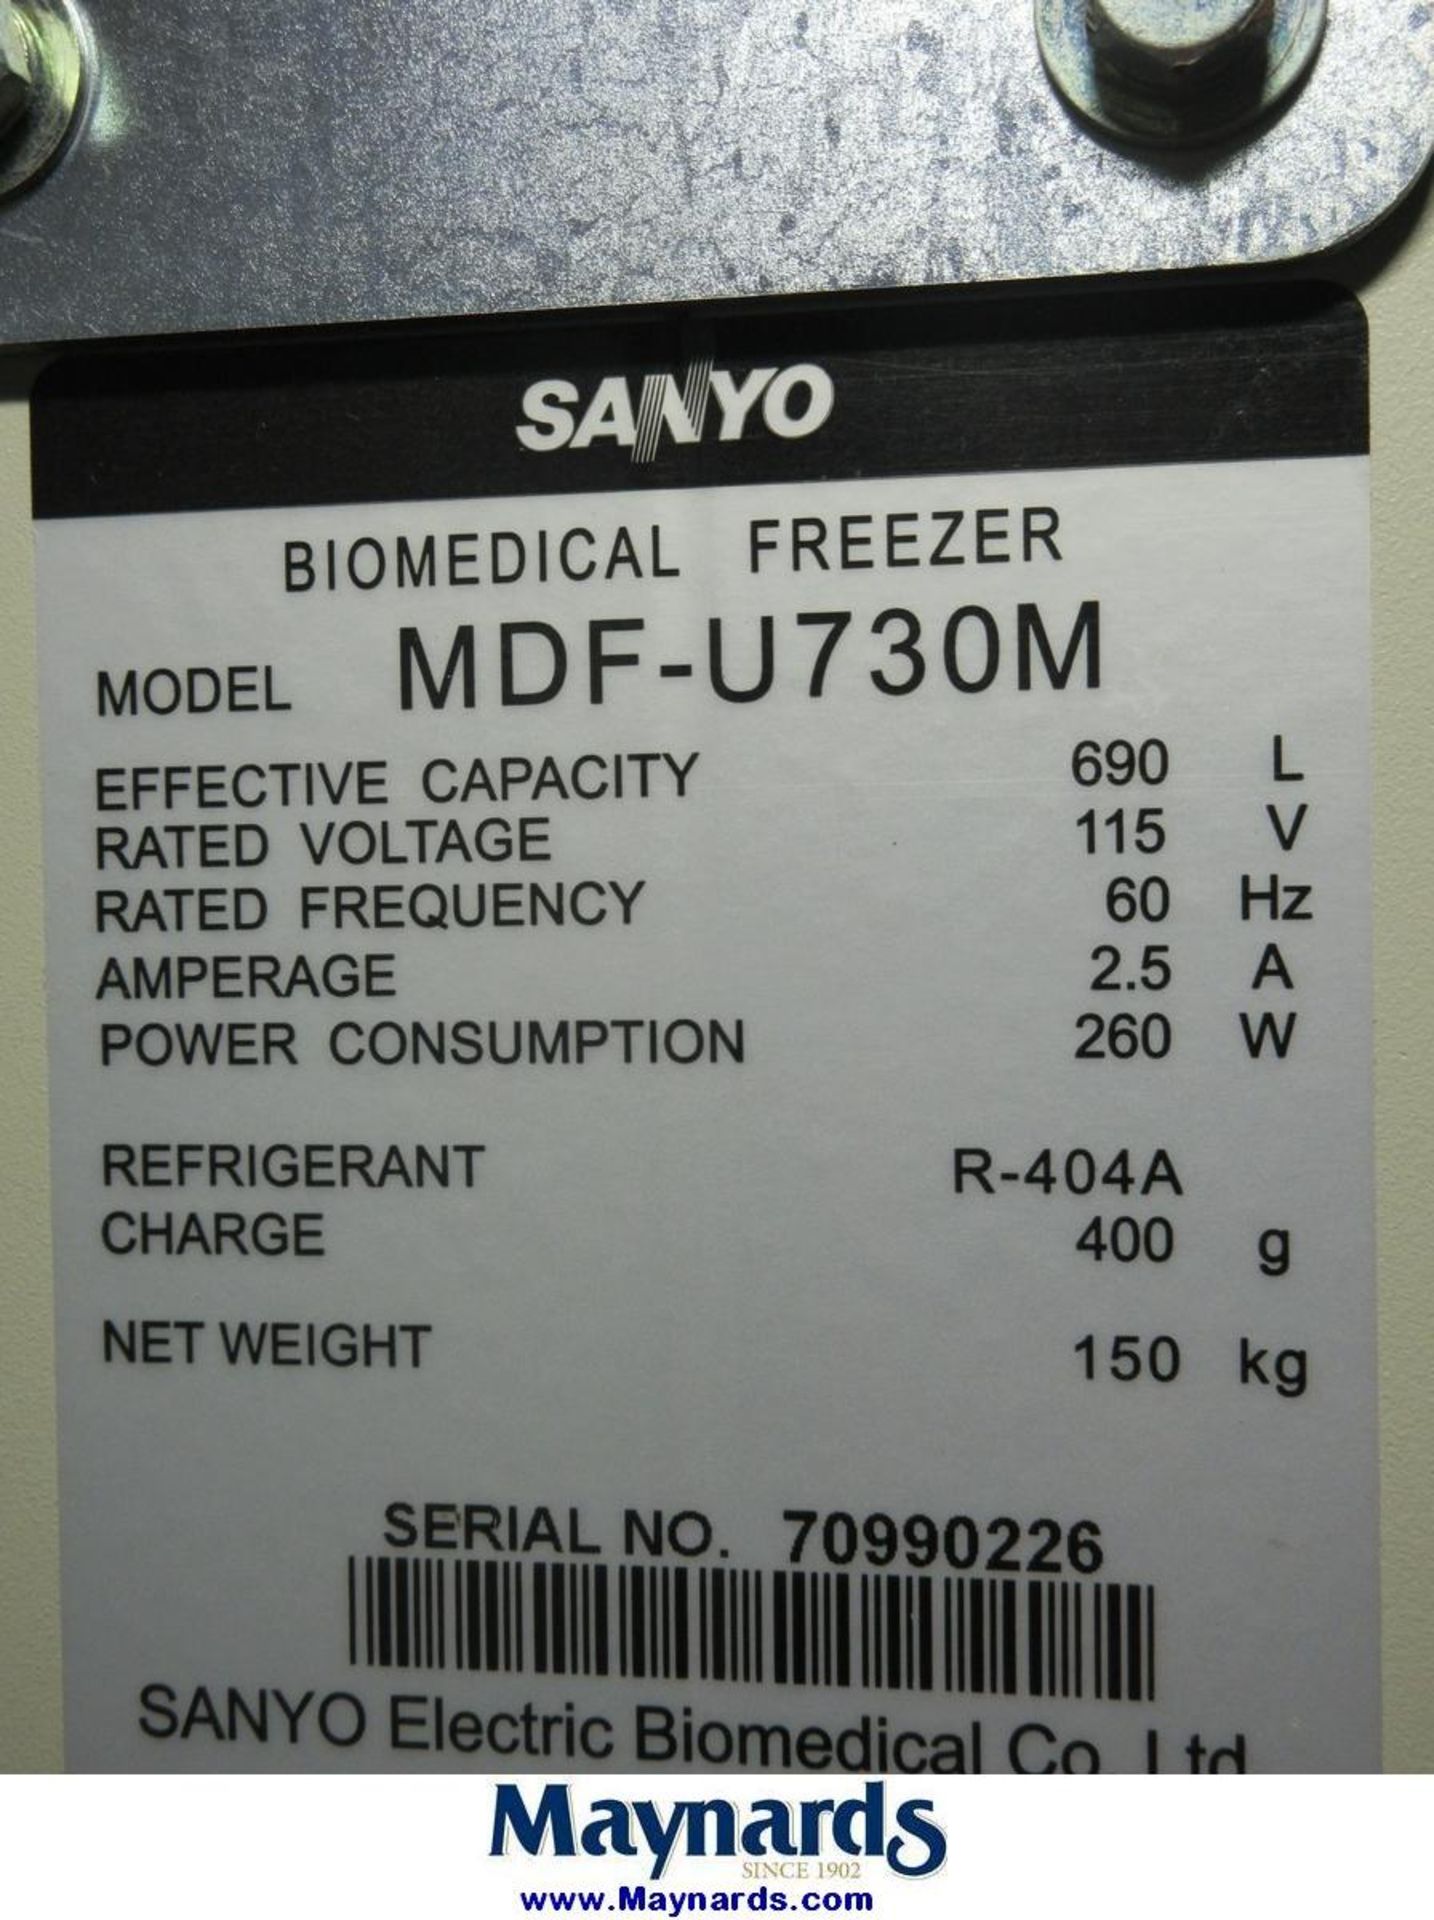 Sanyo MDF-U730M Biomedical Freezer - Image 6 of 6